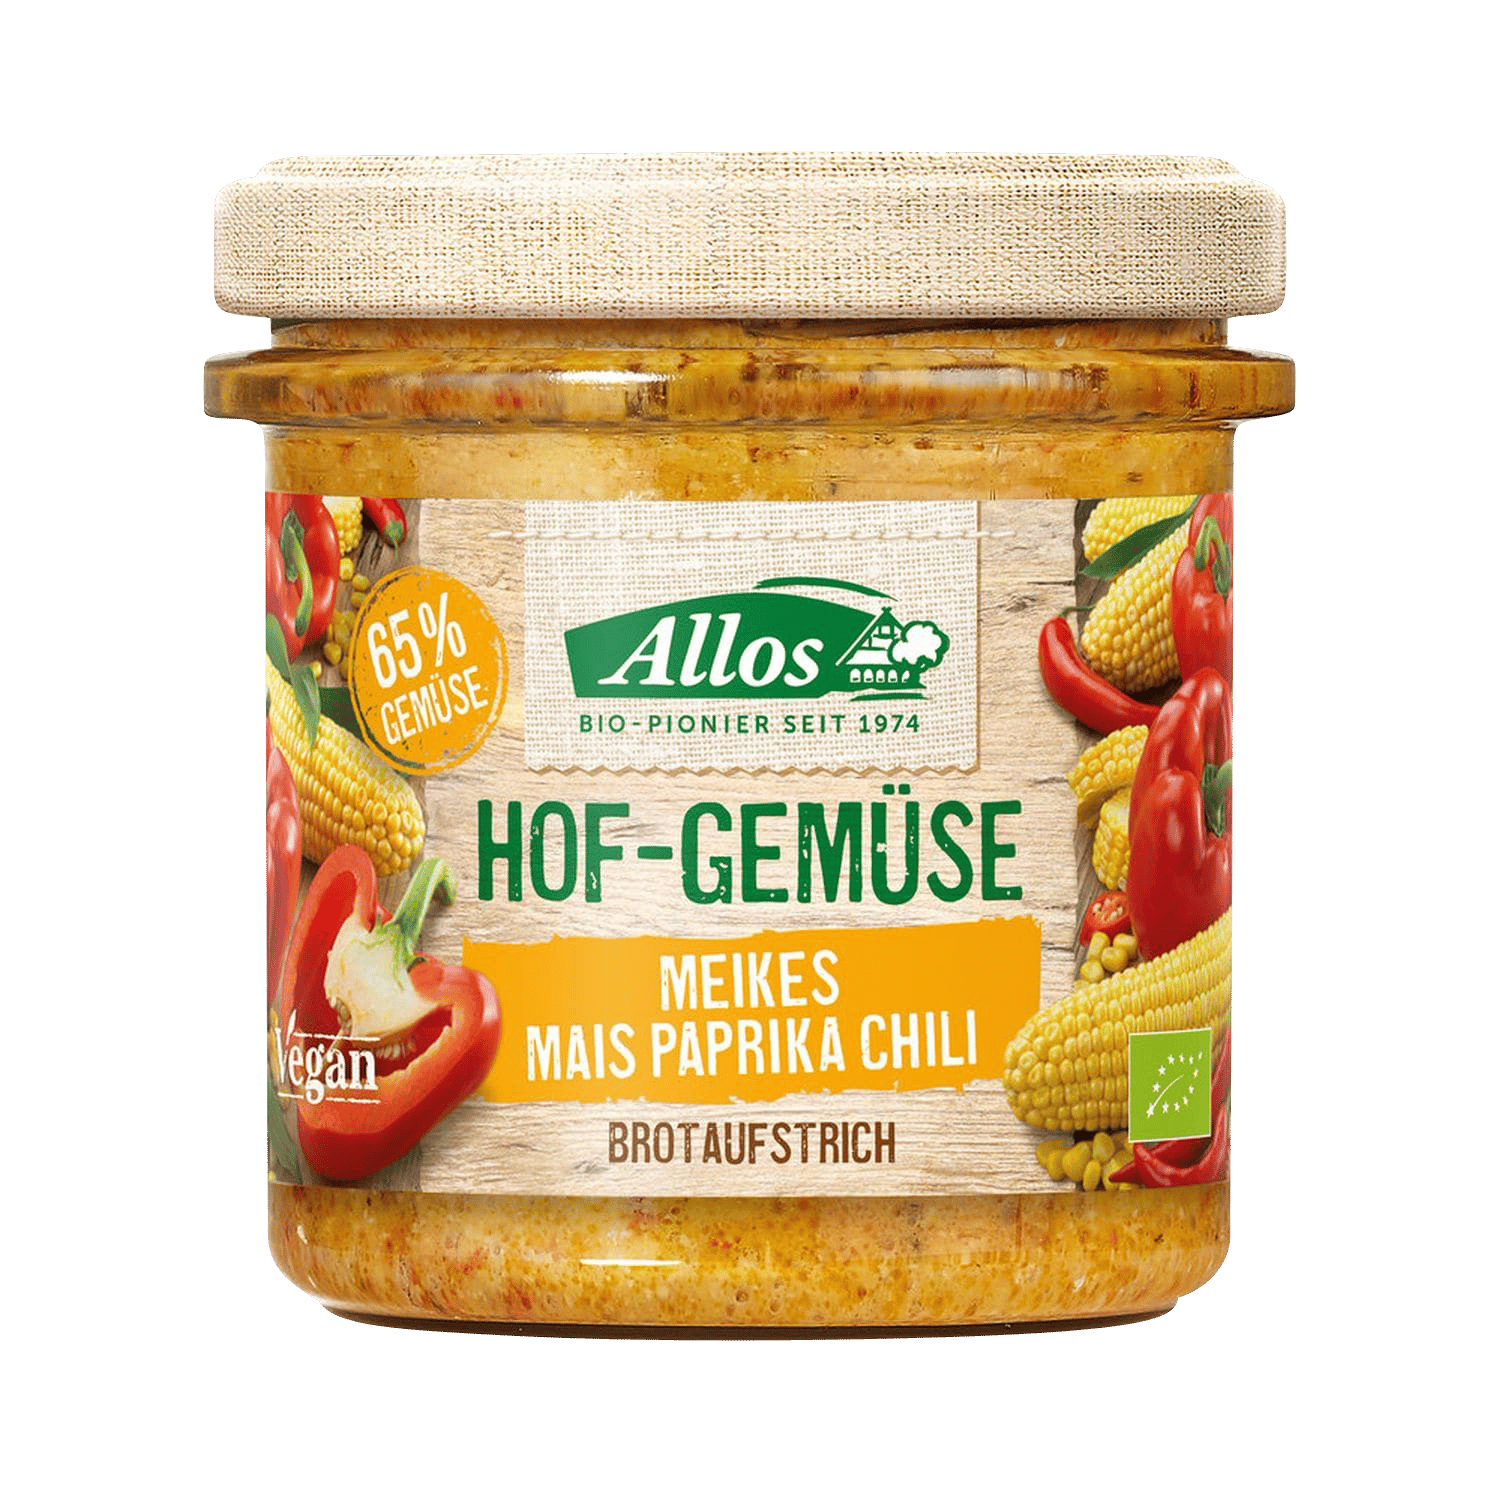 Hofgemüse - Meikes Mais Paprika Chili Spread, Organic, 135g